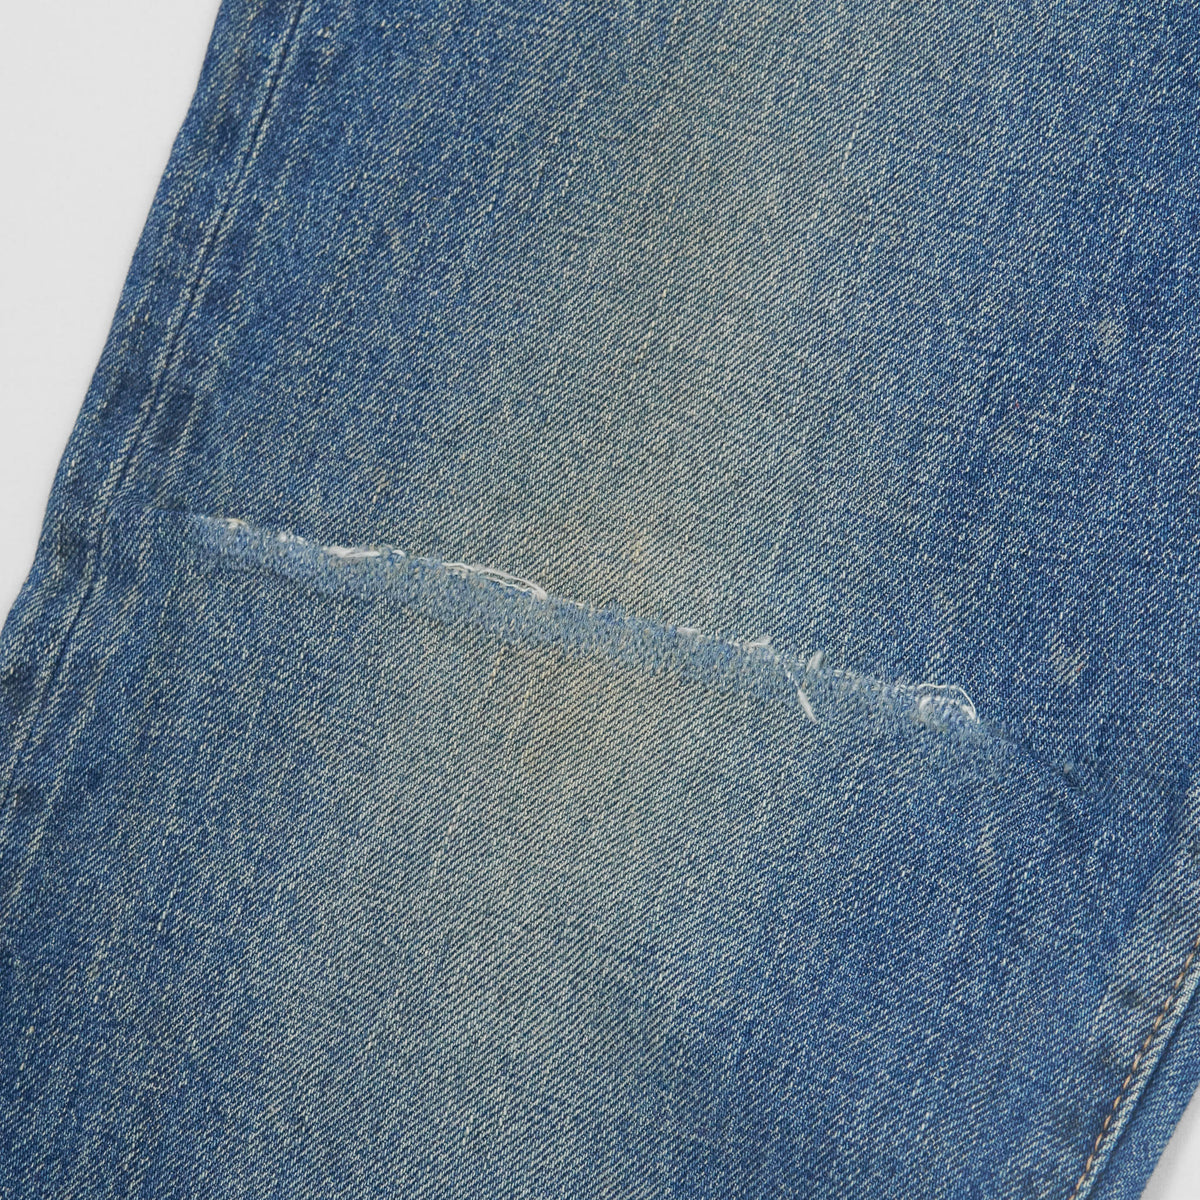 Chimala Heavy Washed Unisex Selvage Denim Jeans